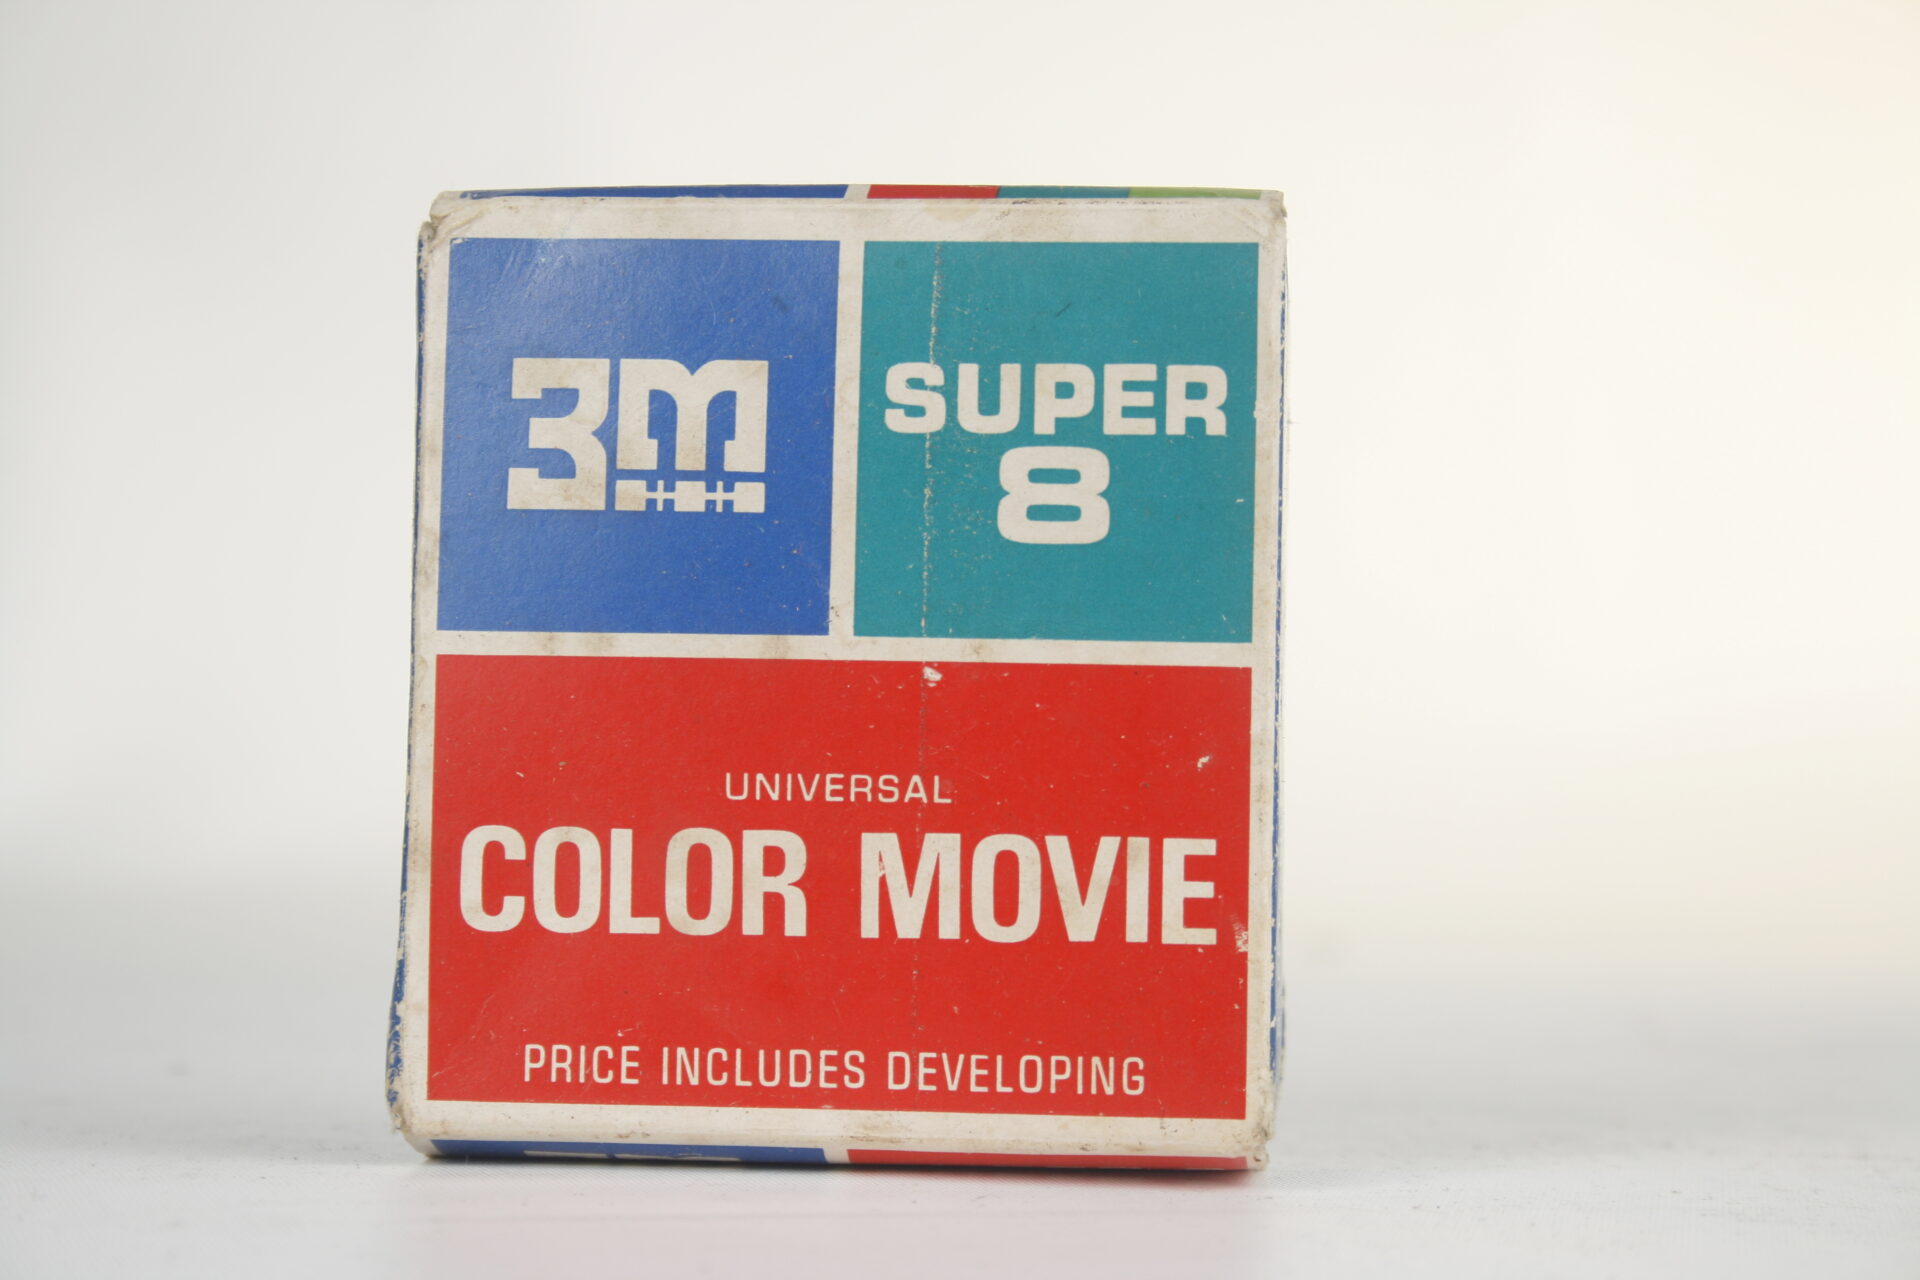 3M. Super 8 universele kleurenfilm